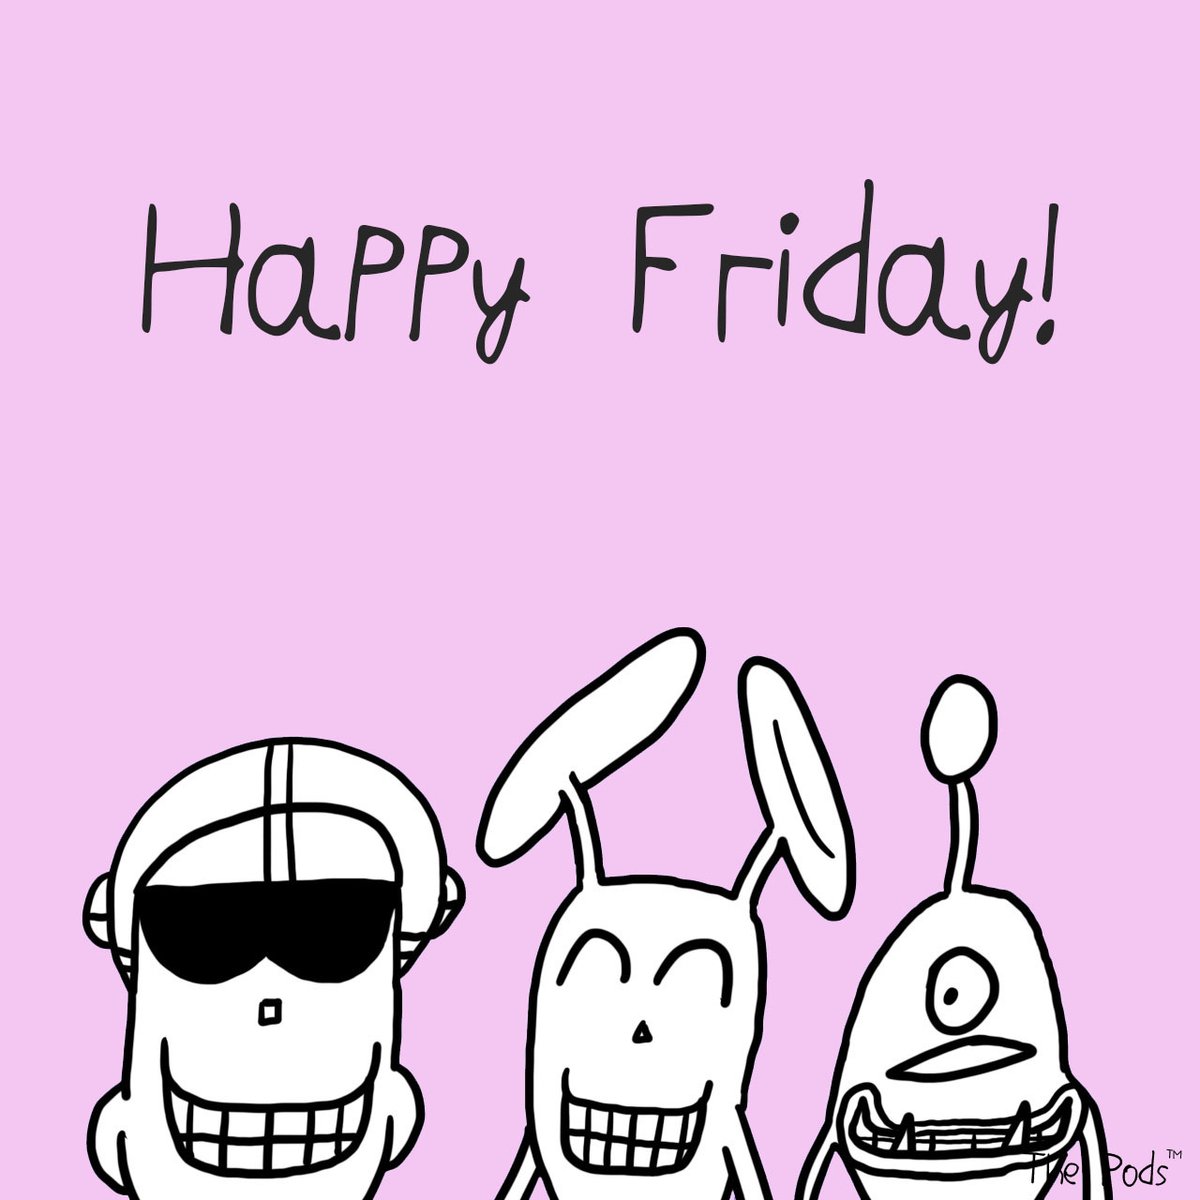 Happy Weekend!
#friday #friyay #happyweekend #happyfriday #tgif 
#weekend #meetthepods #thepods #spypod 
#bunnypod #snappypod #autisticartist #autism 
#autistic #cartoon #character #instafriday